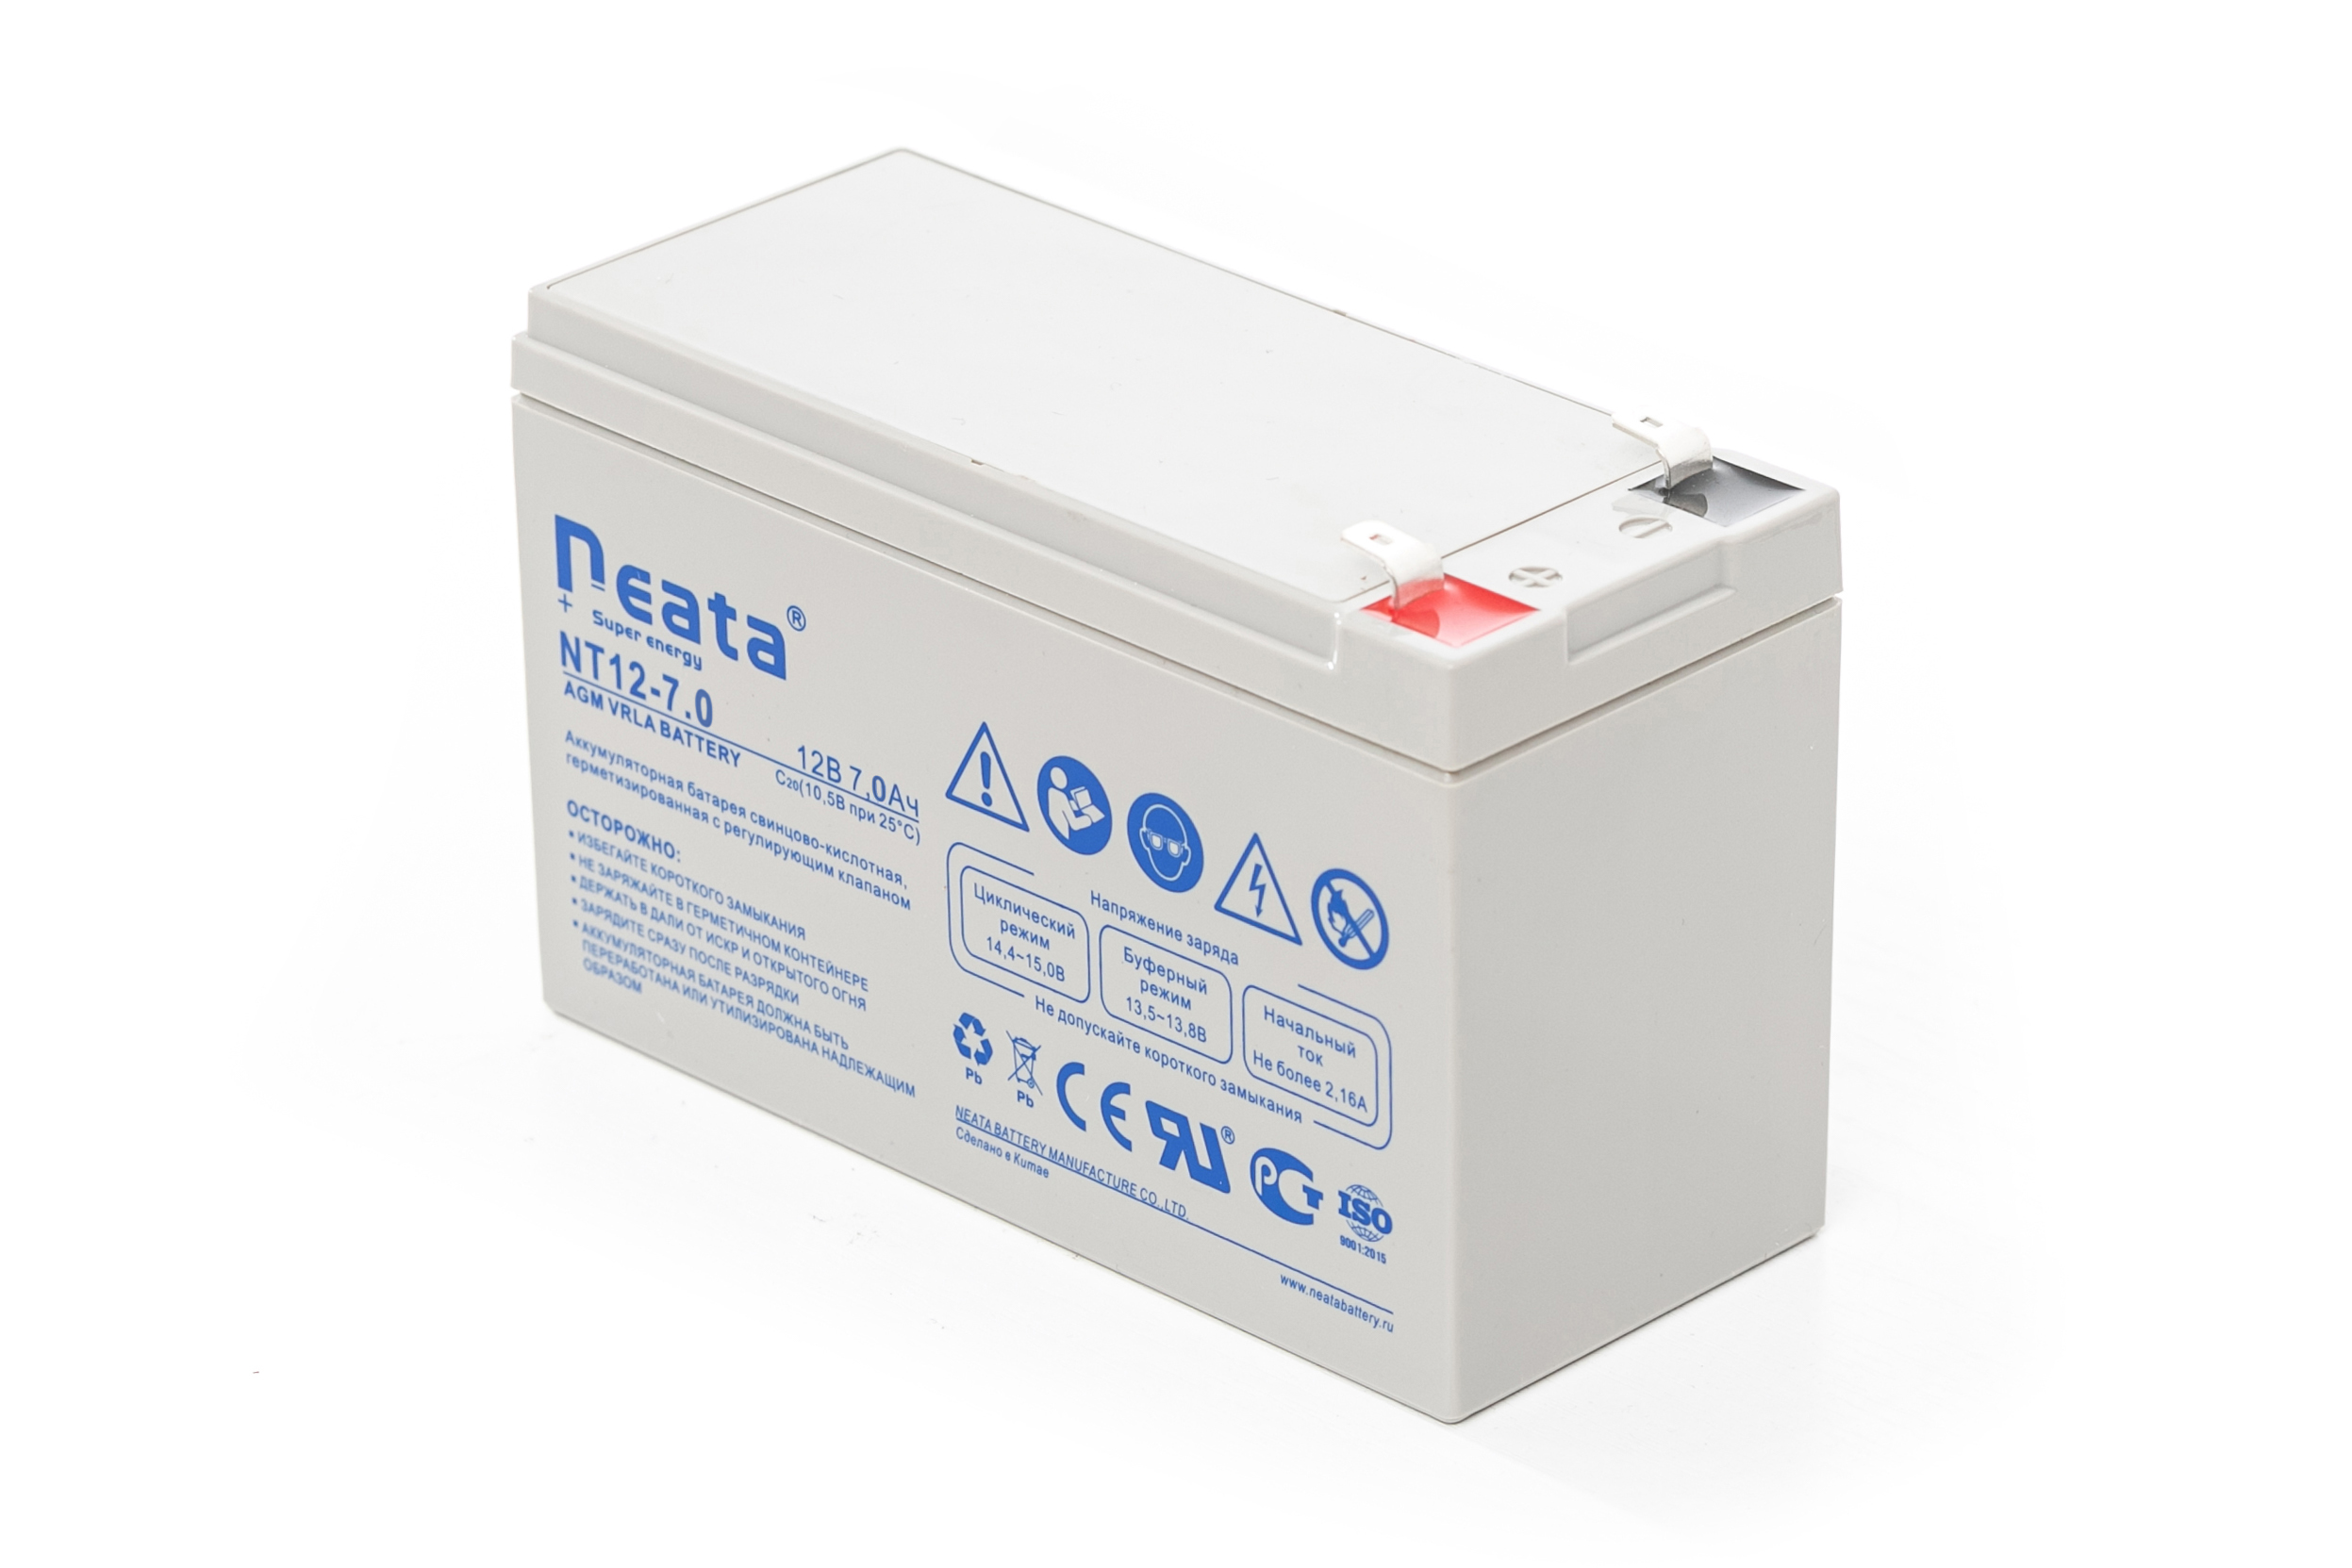 Аккумуляторная батарея Neata NT 12-7.0